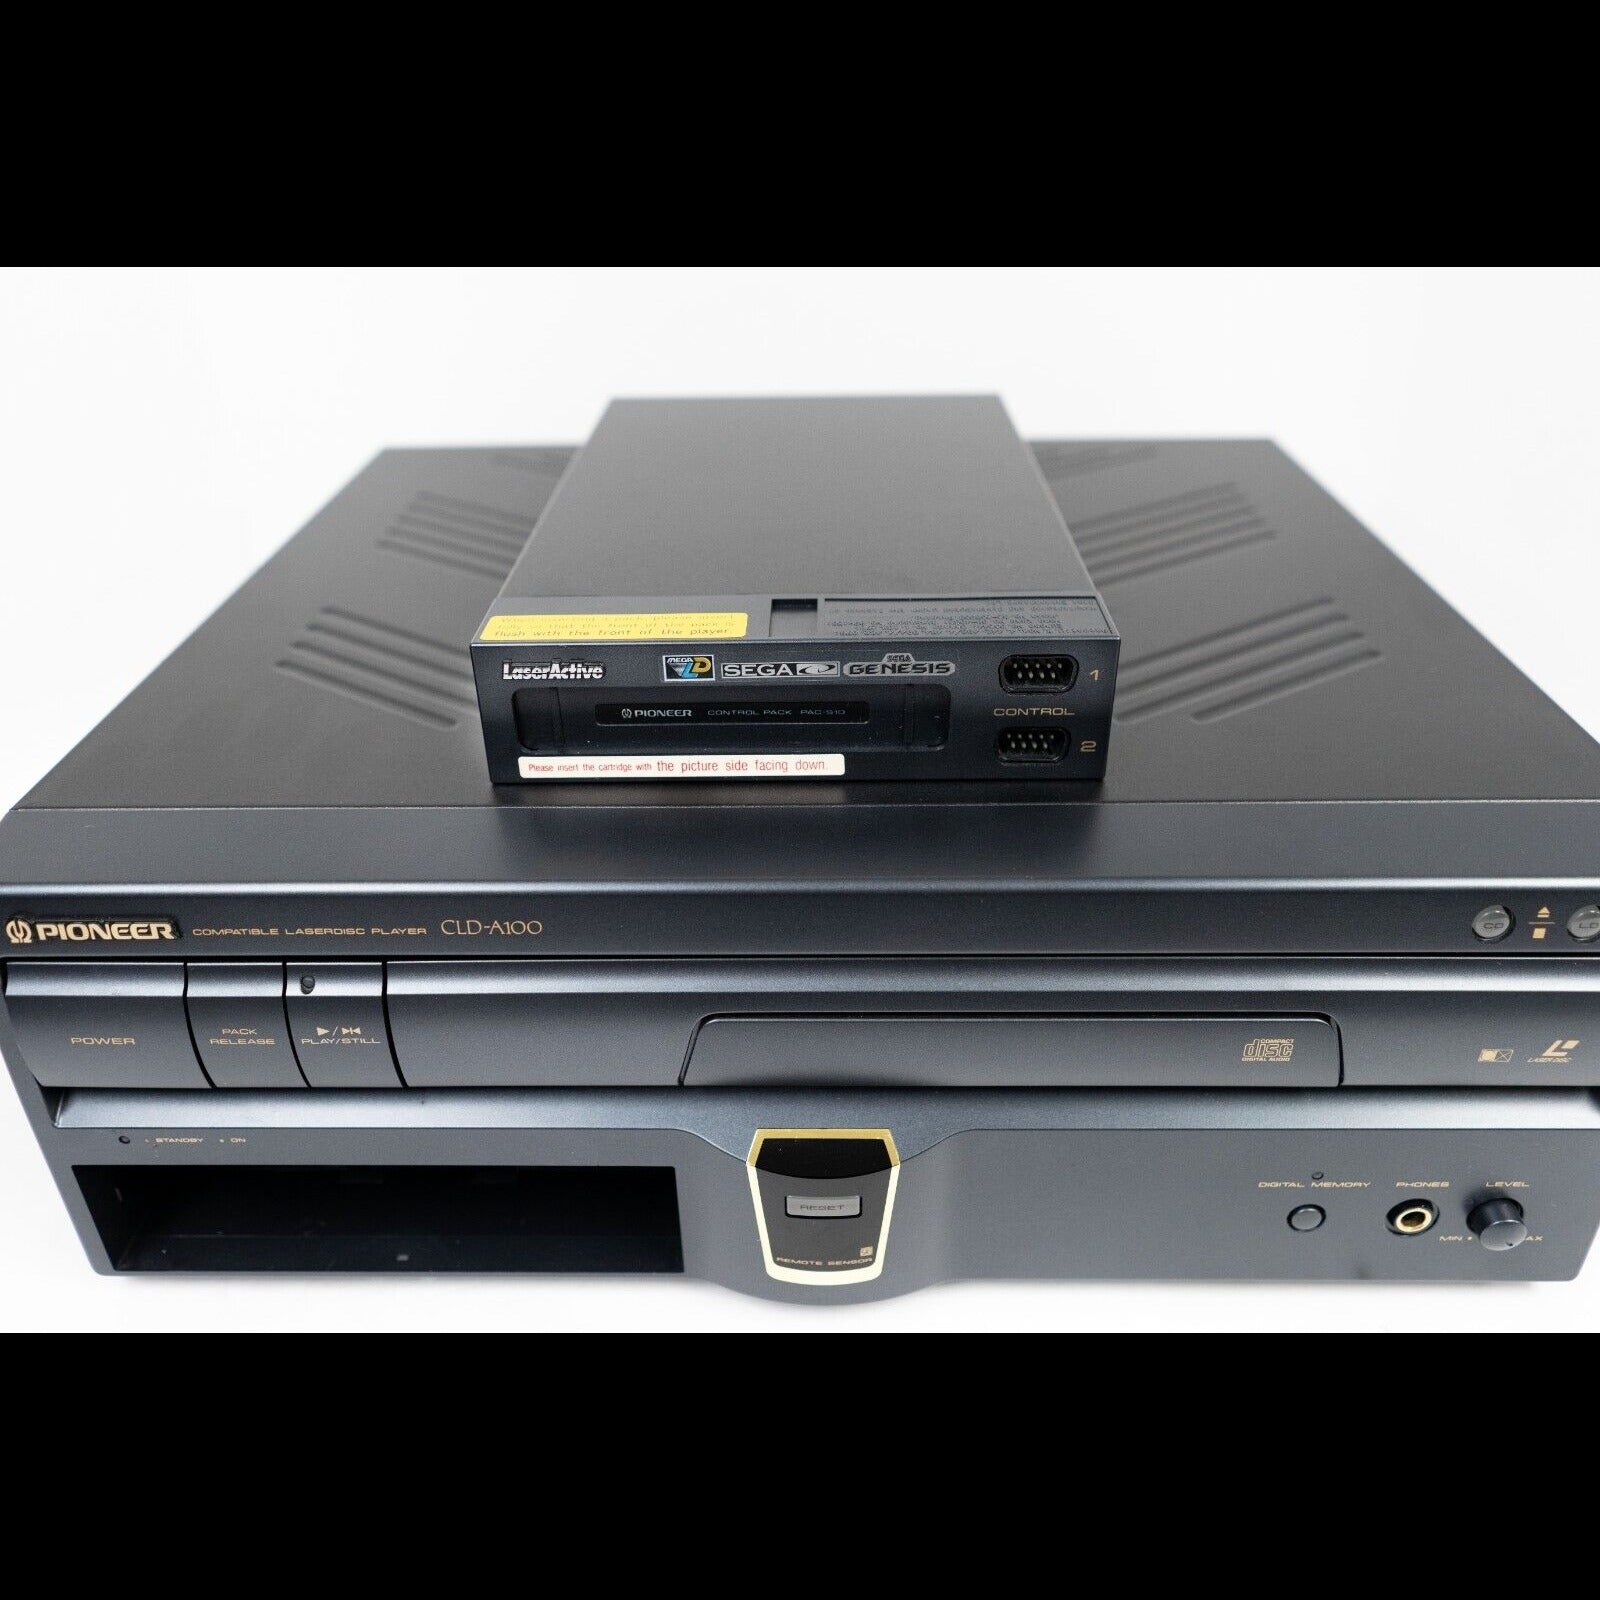 Pioneer LaserDisc Sega Genesis CLD-A100 Laser Active Tested w/ Sega Pac-S10